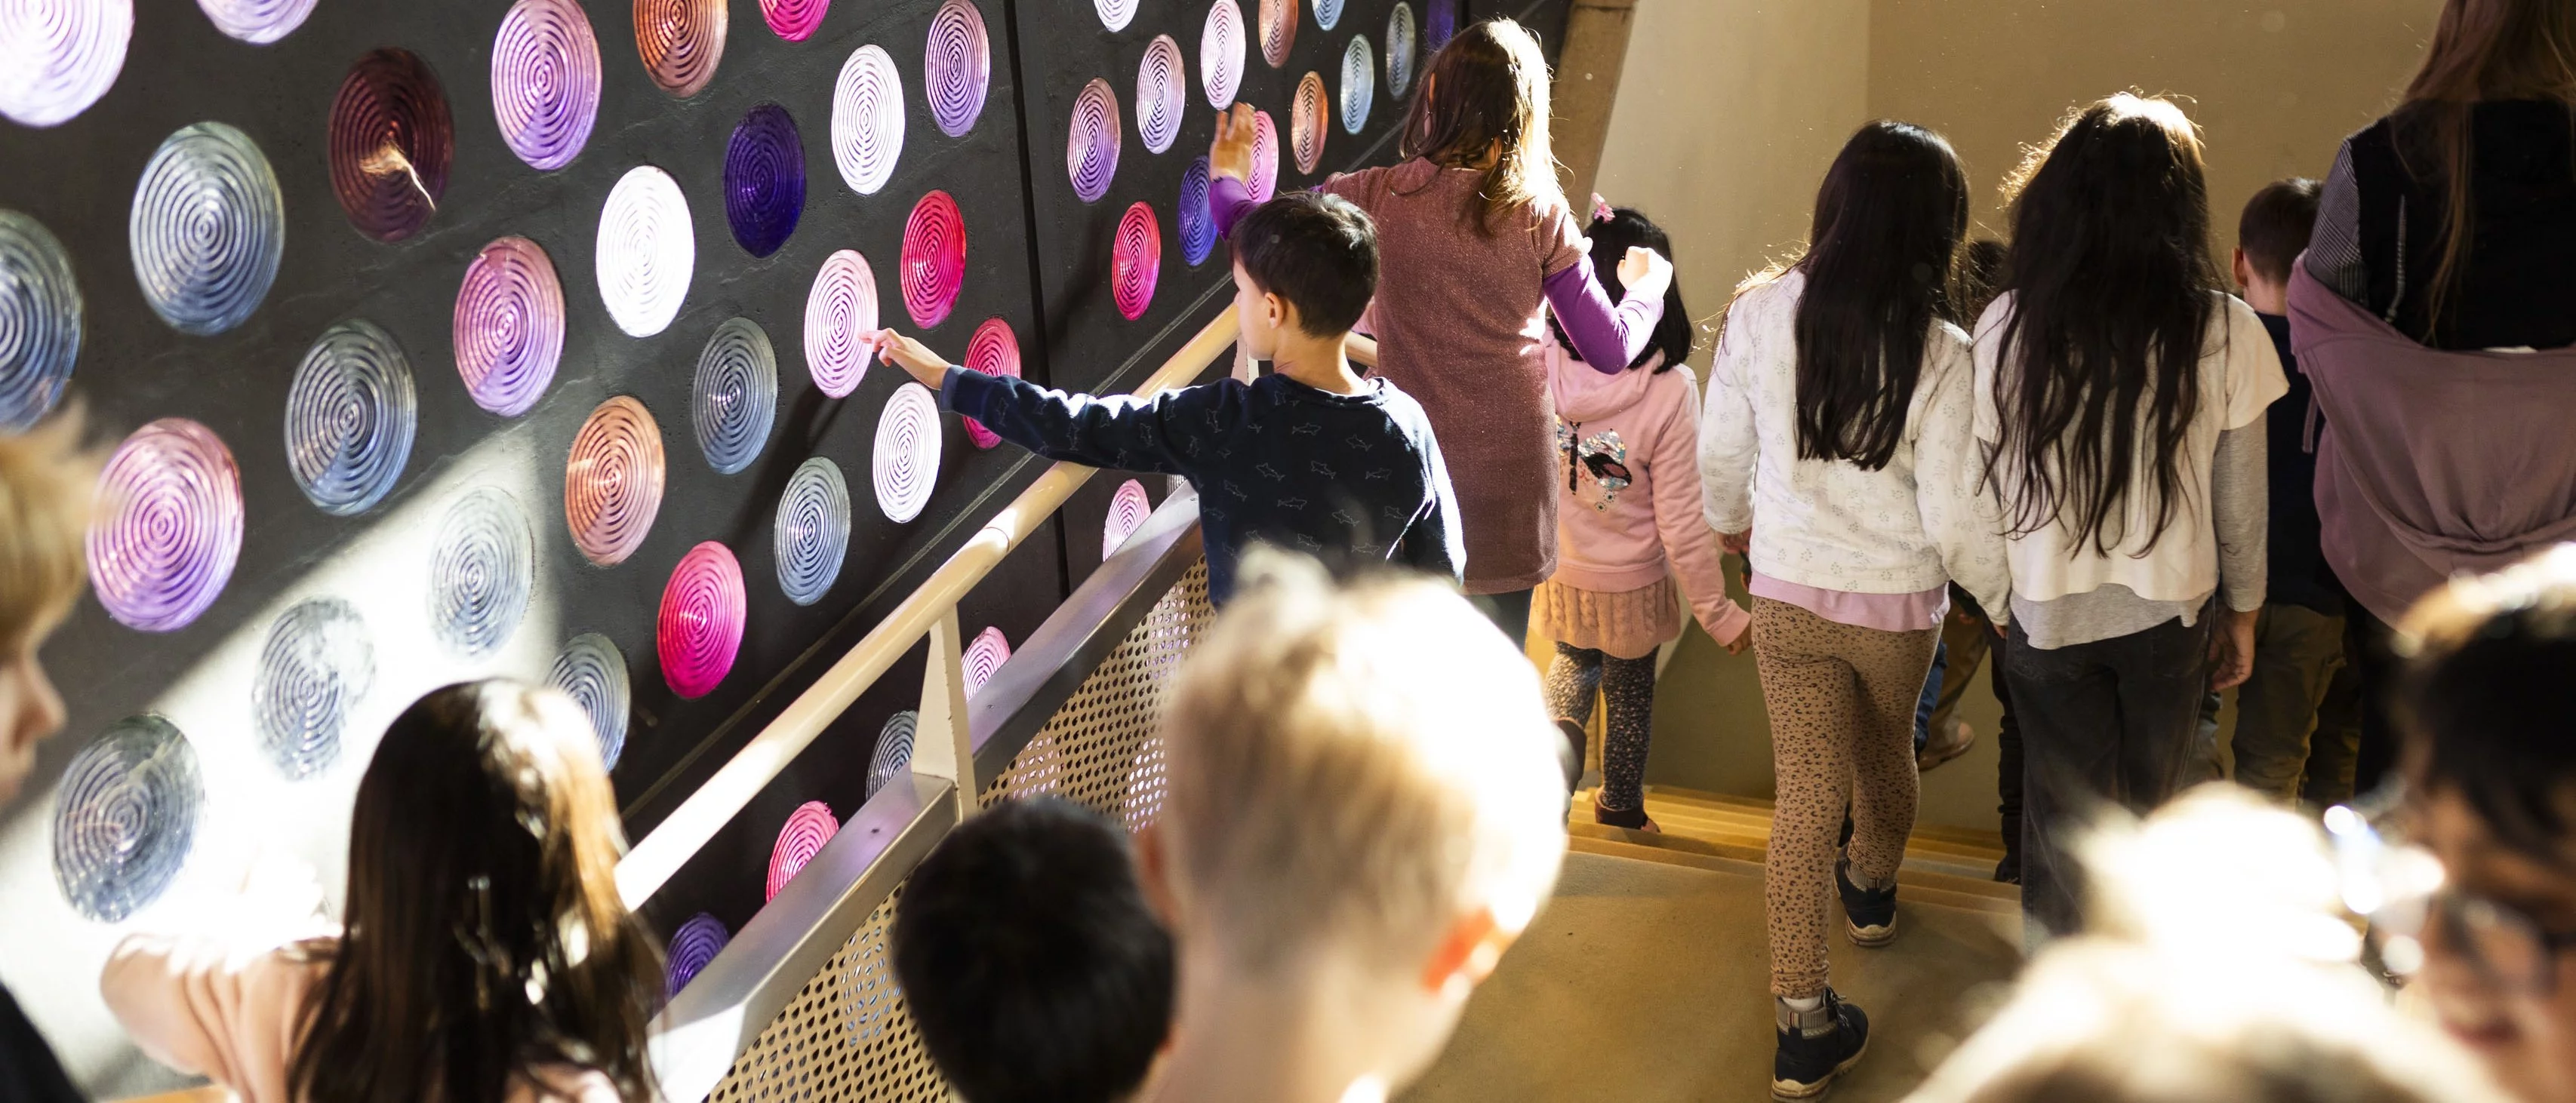 Children walk along colourful glass blocks in the Philharmonie